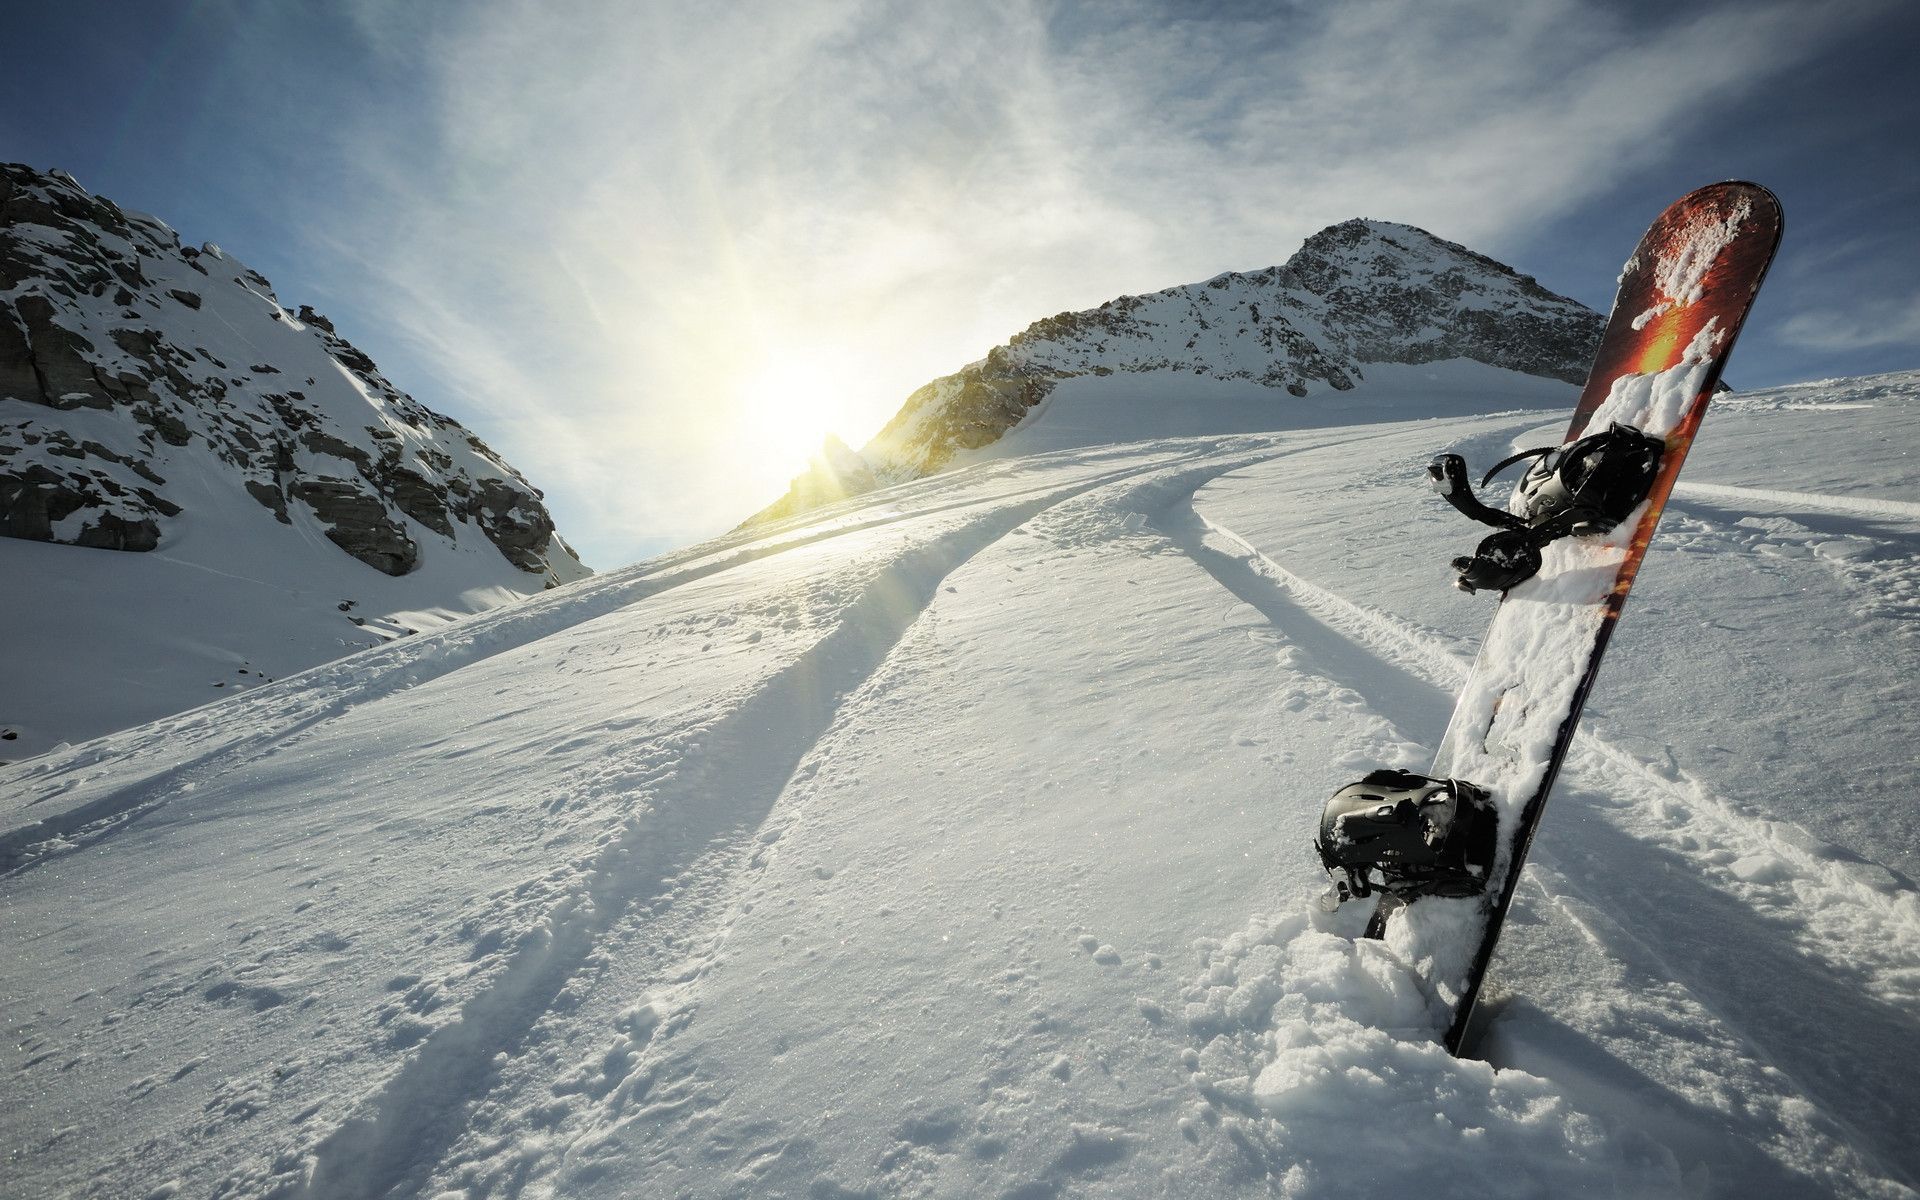 Wallpaper ID 5241  snowboarder snowboard stunt jump extreme 4k free  download